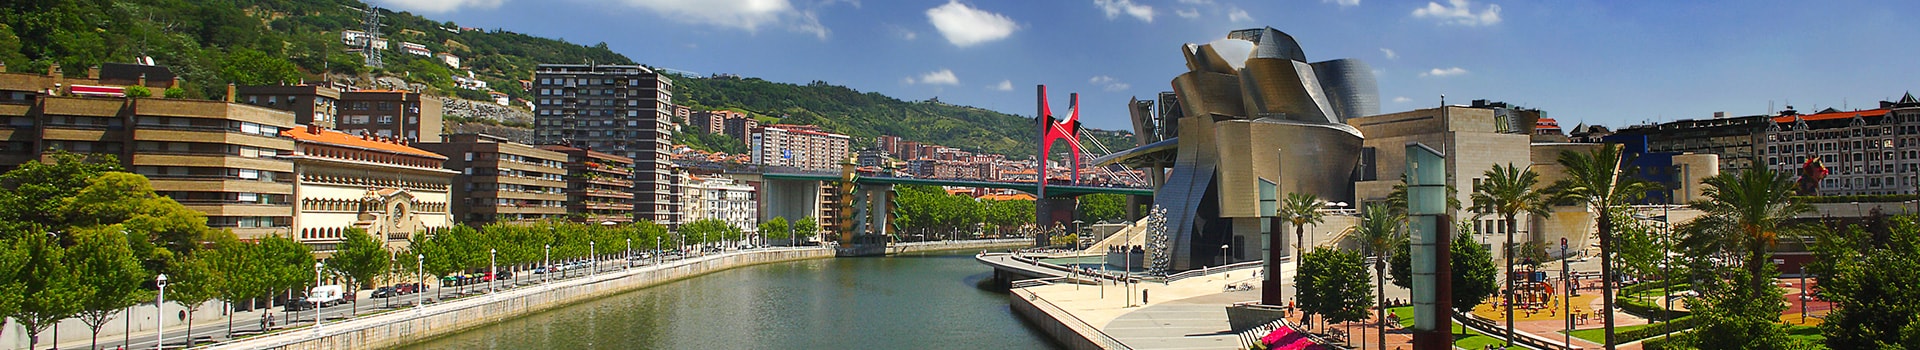 A Coruña - Bilbao